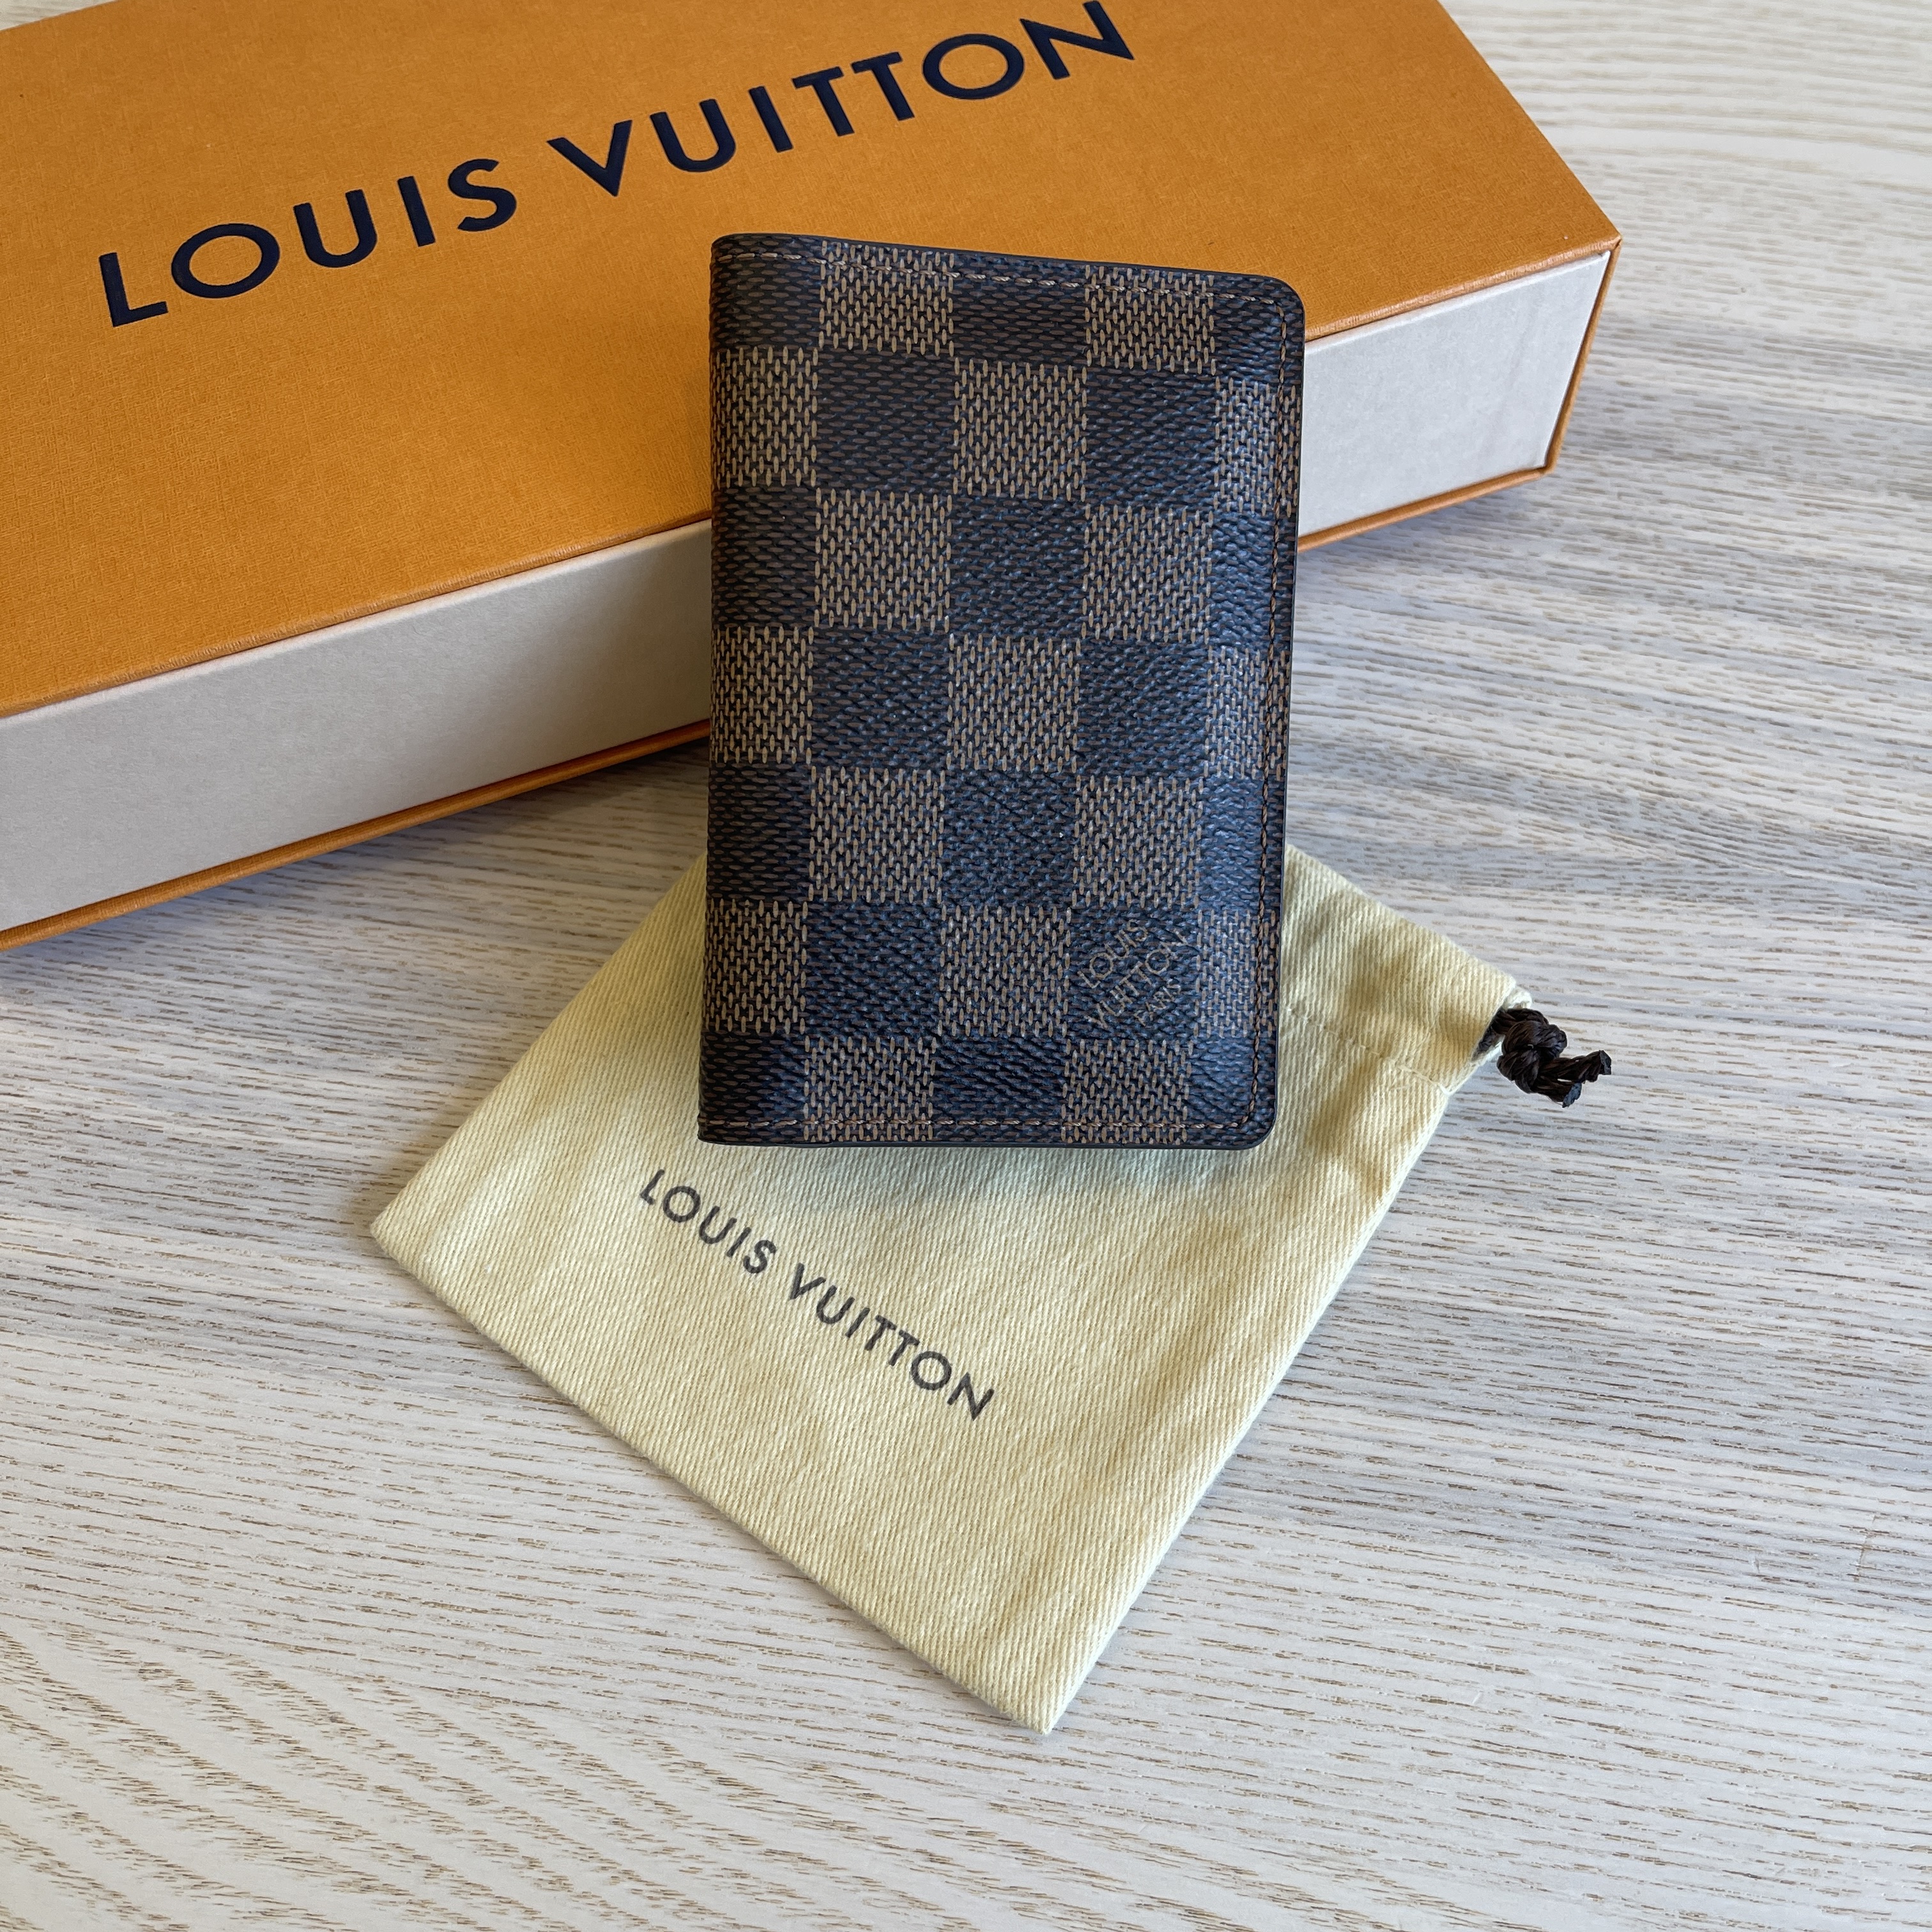 Louis Vuitton Damier Ebene Pocket Agenda Cover